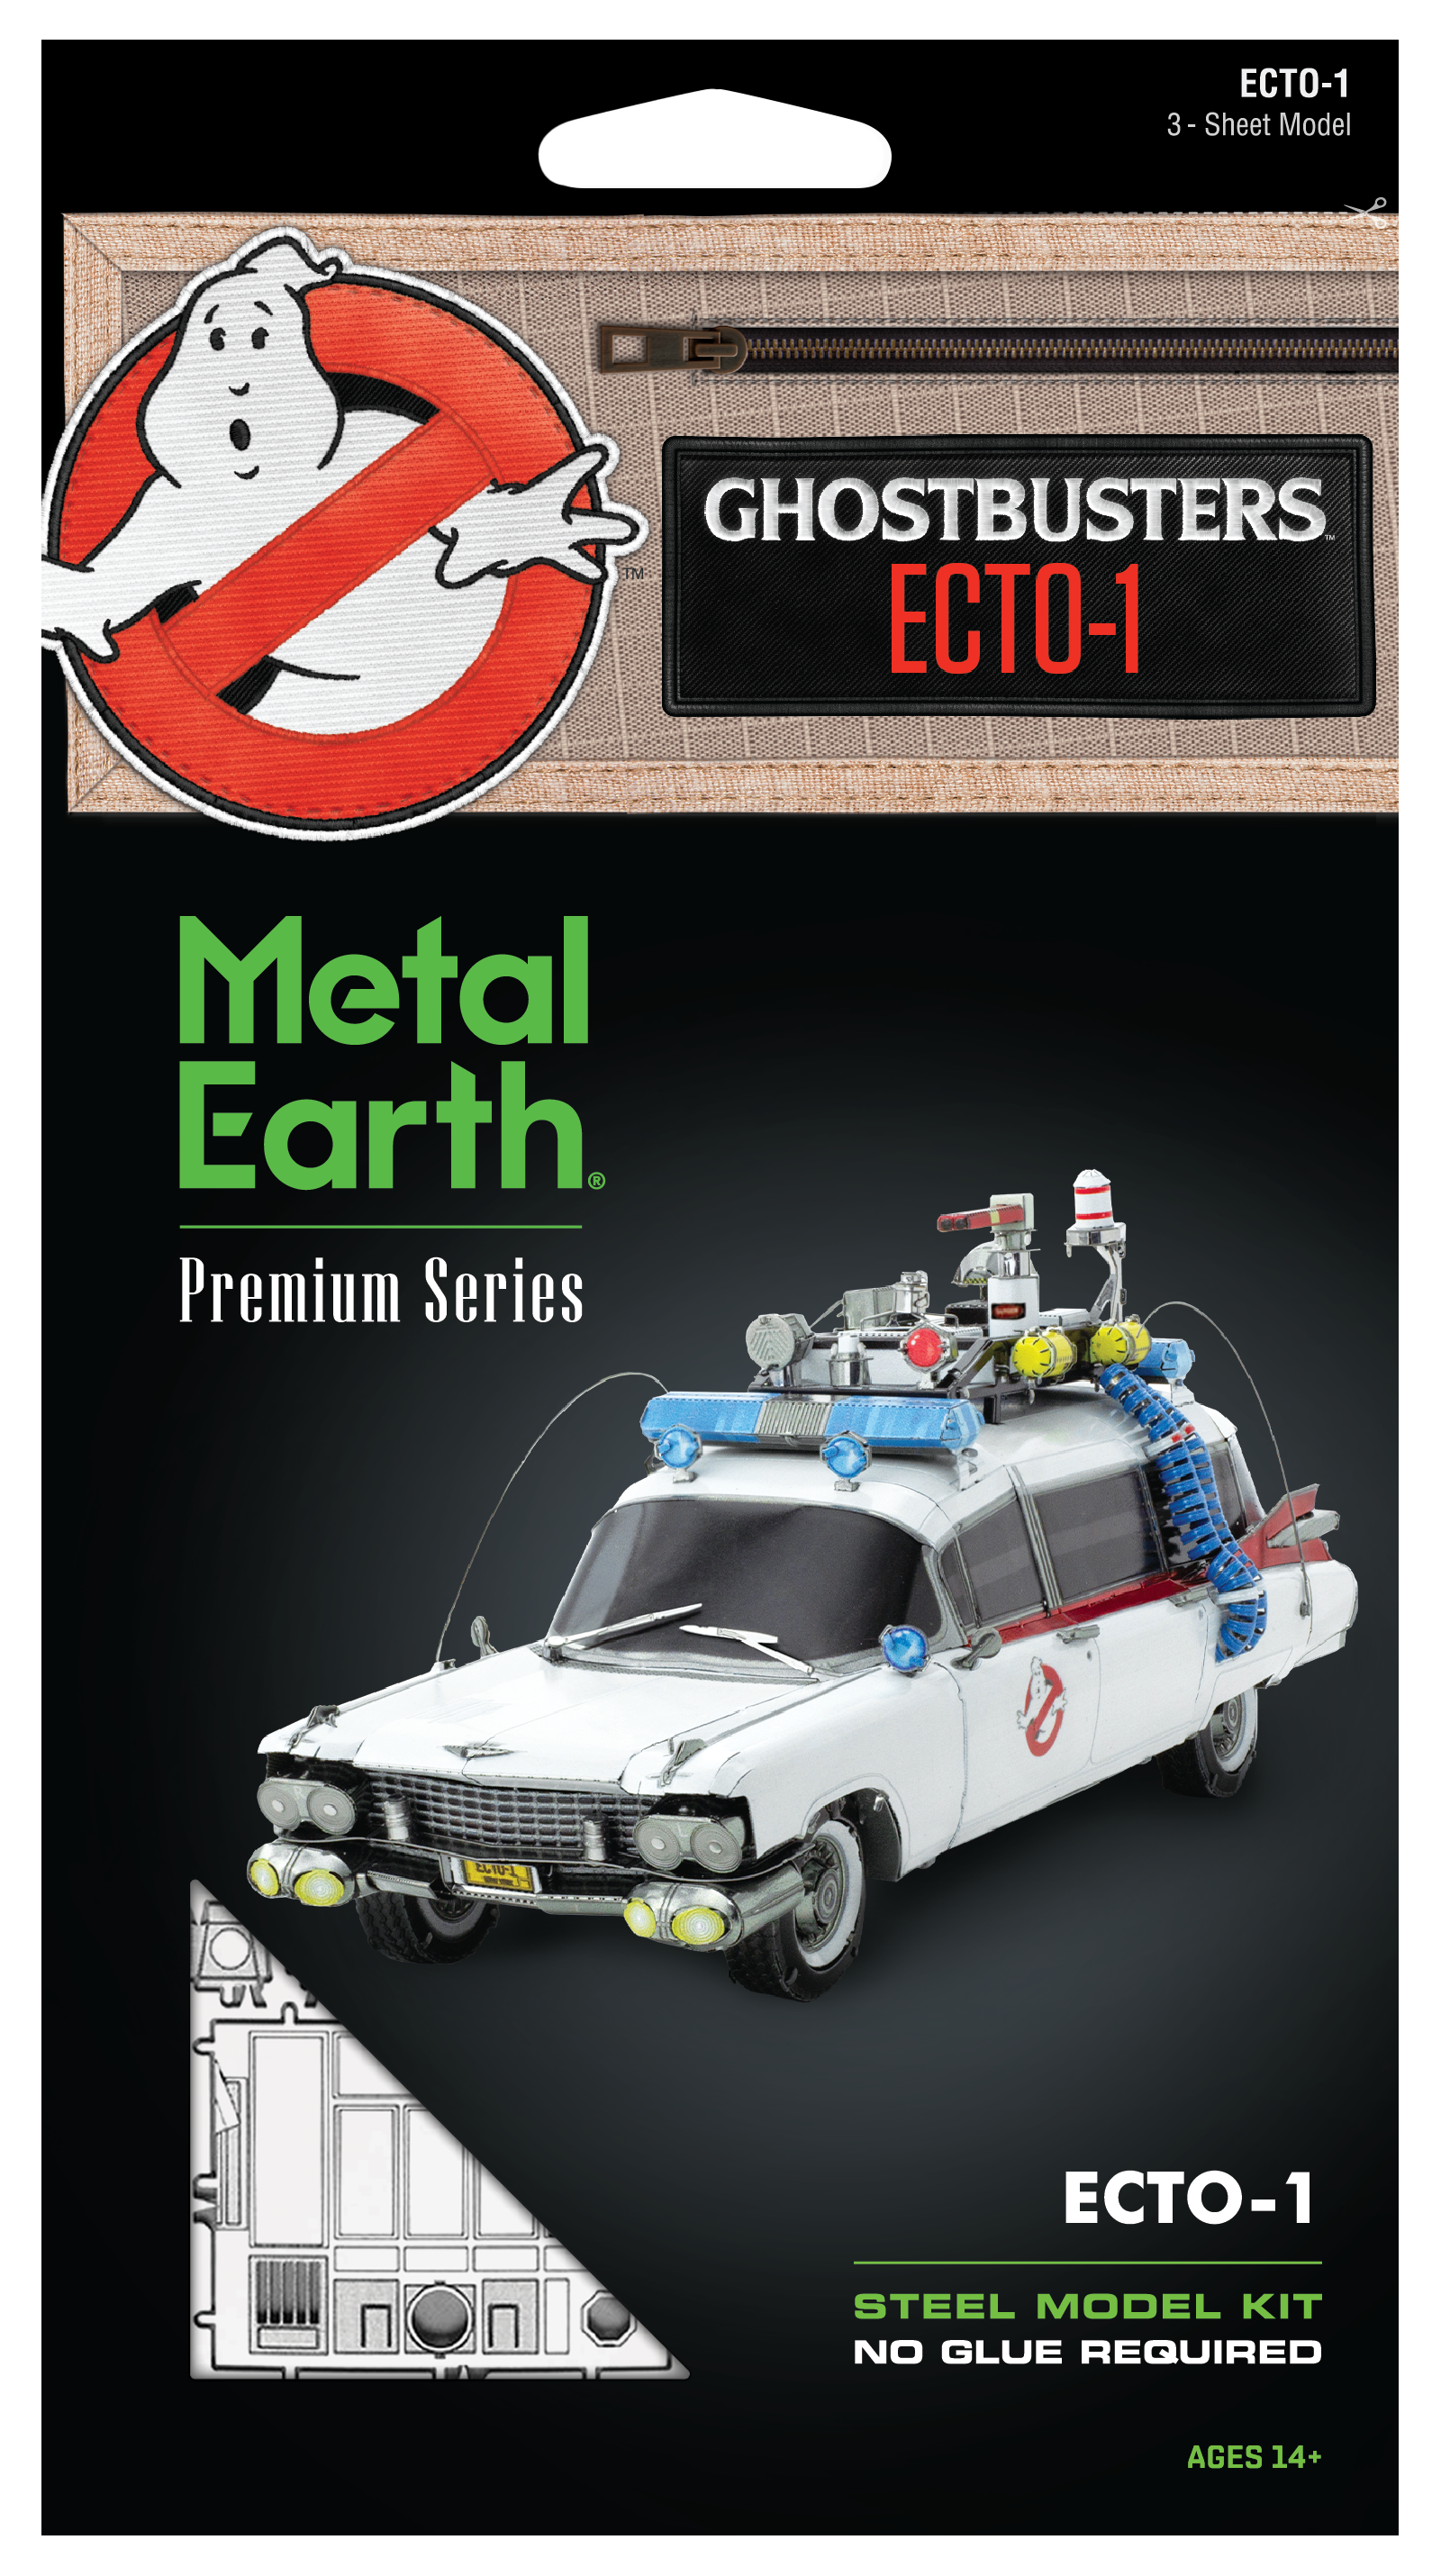 Metal Earth - Premium Series - Ghostbuster: Ecto-1 Model Kit